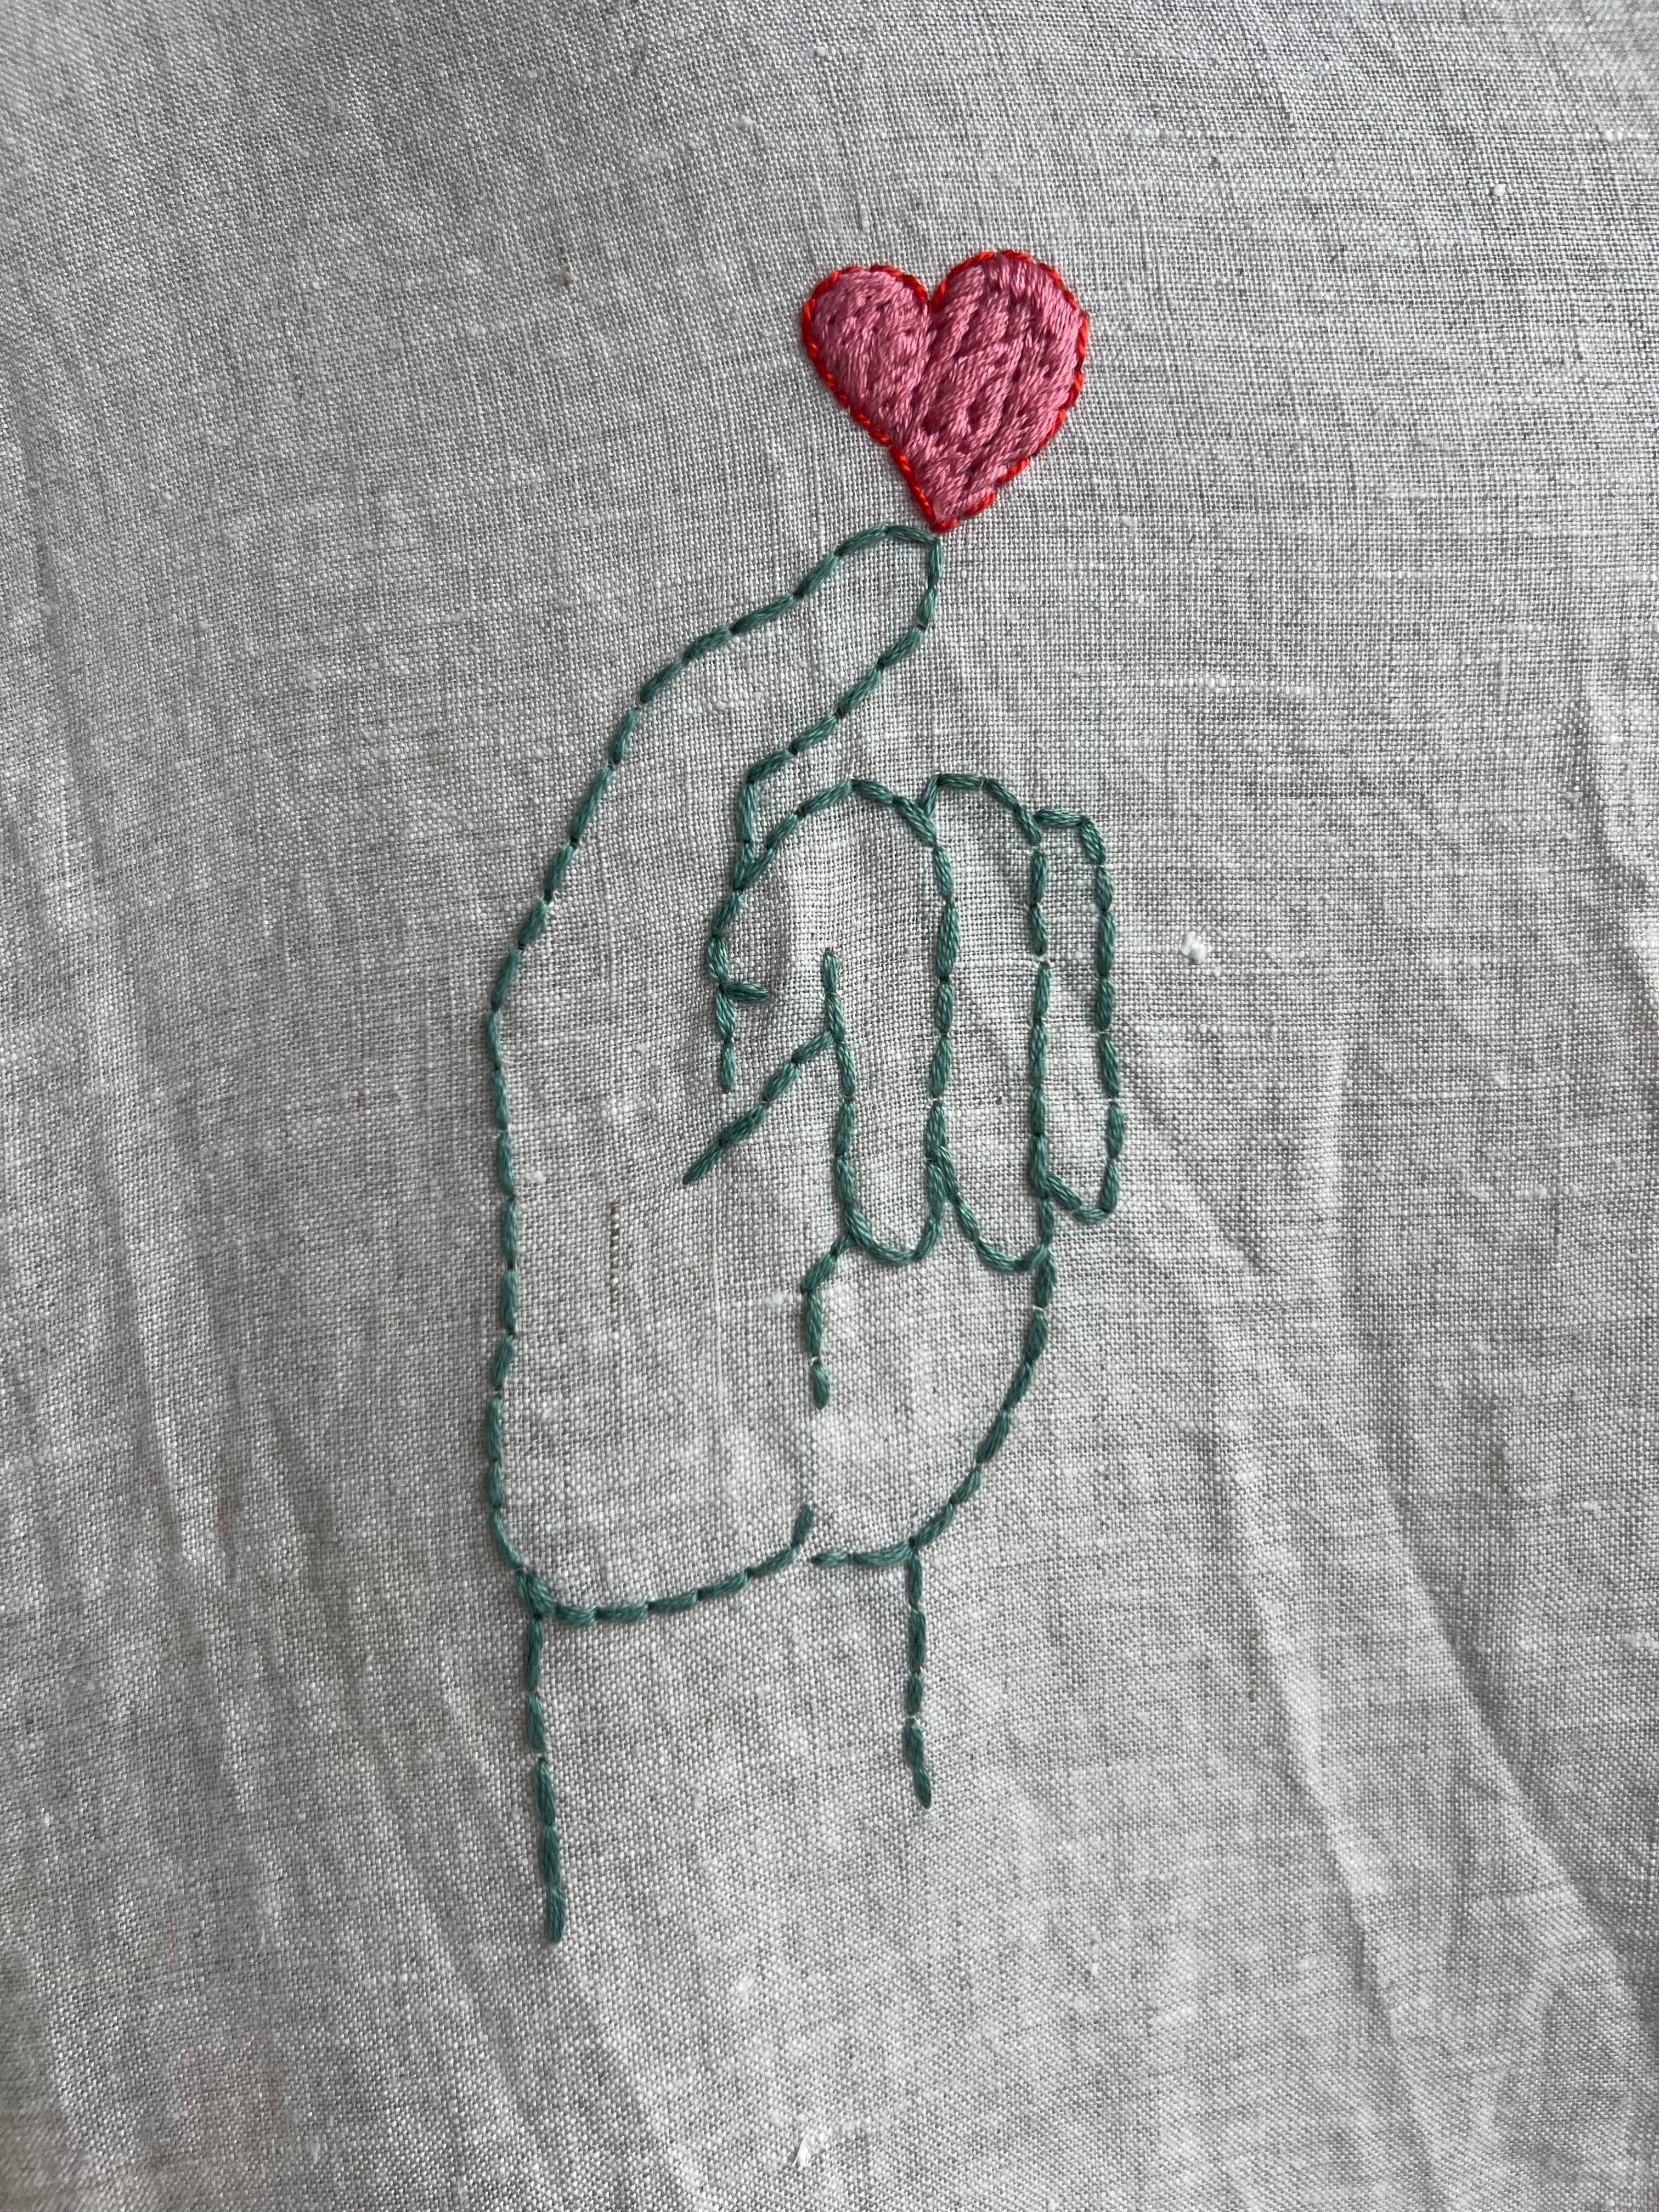 hand heart